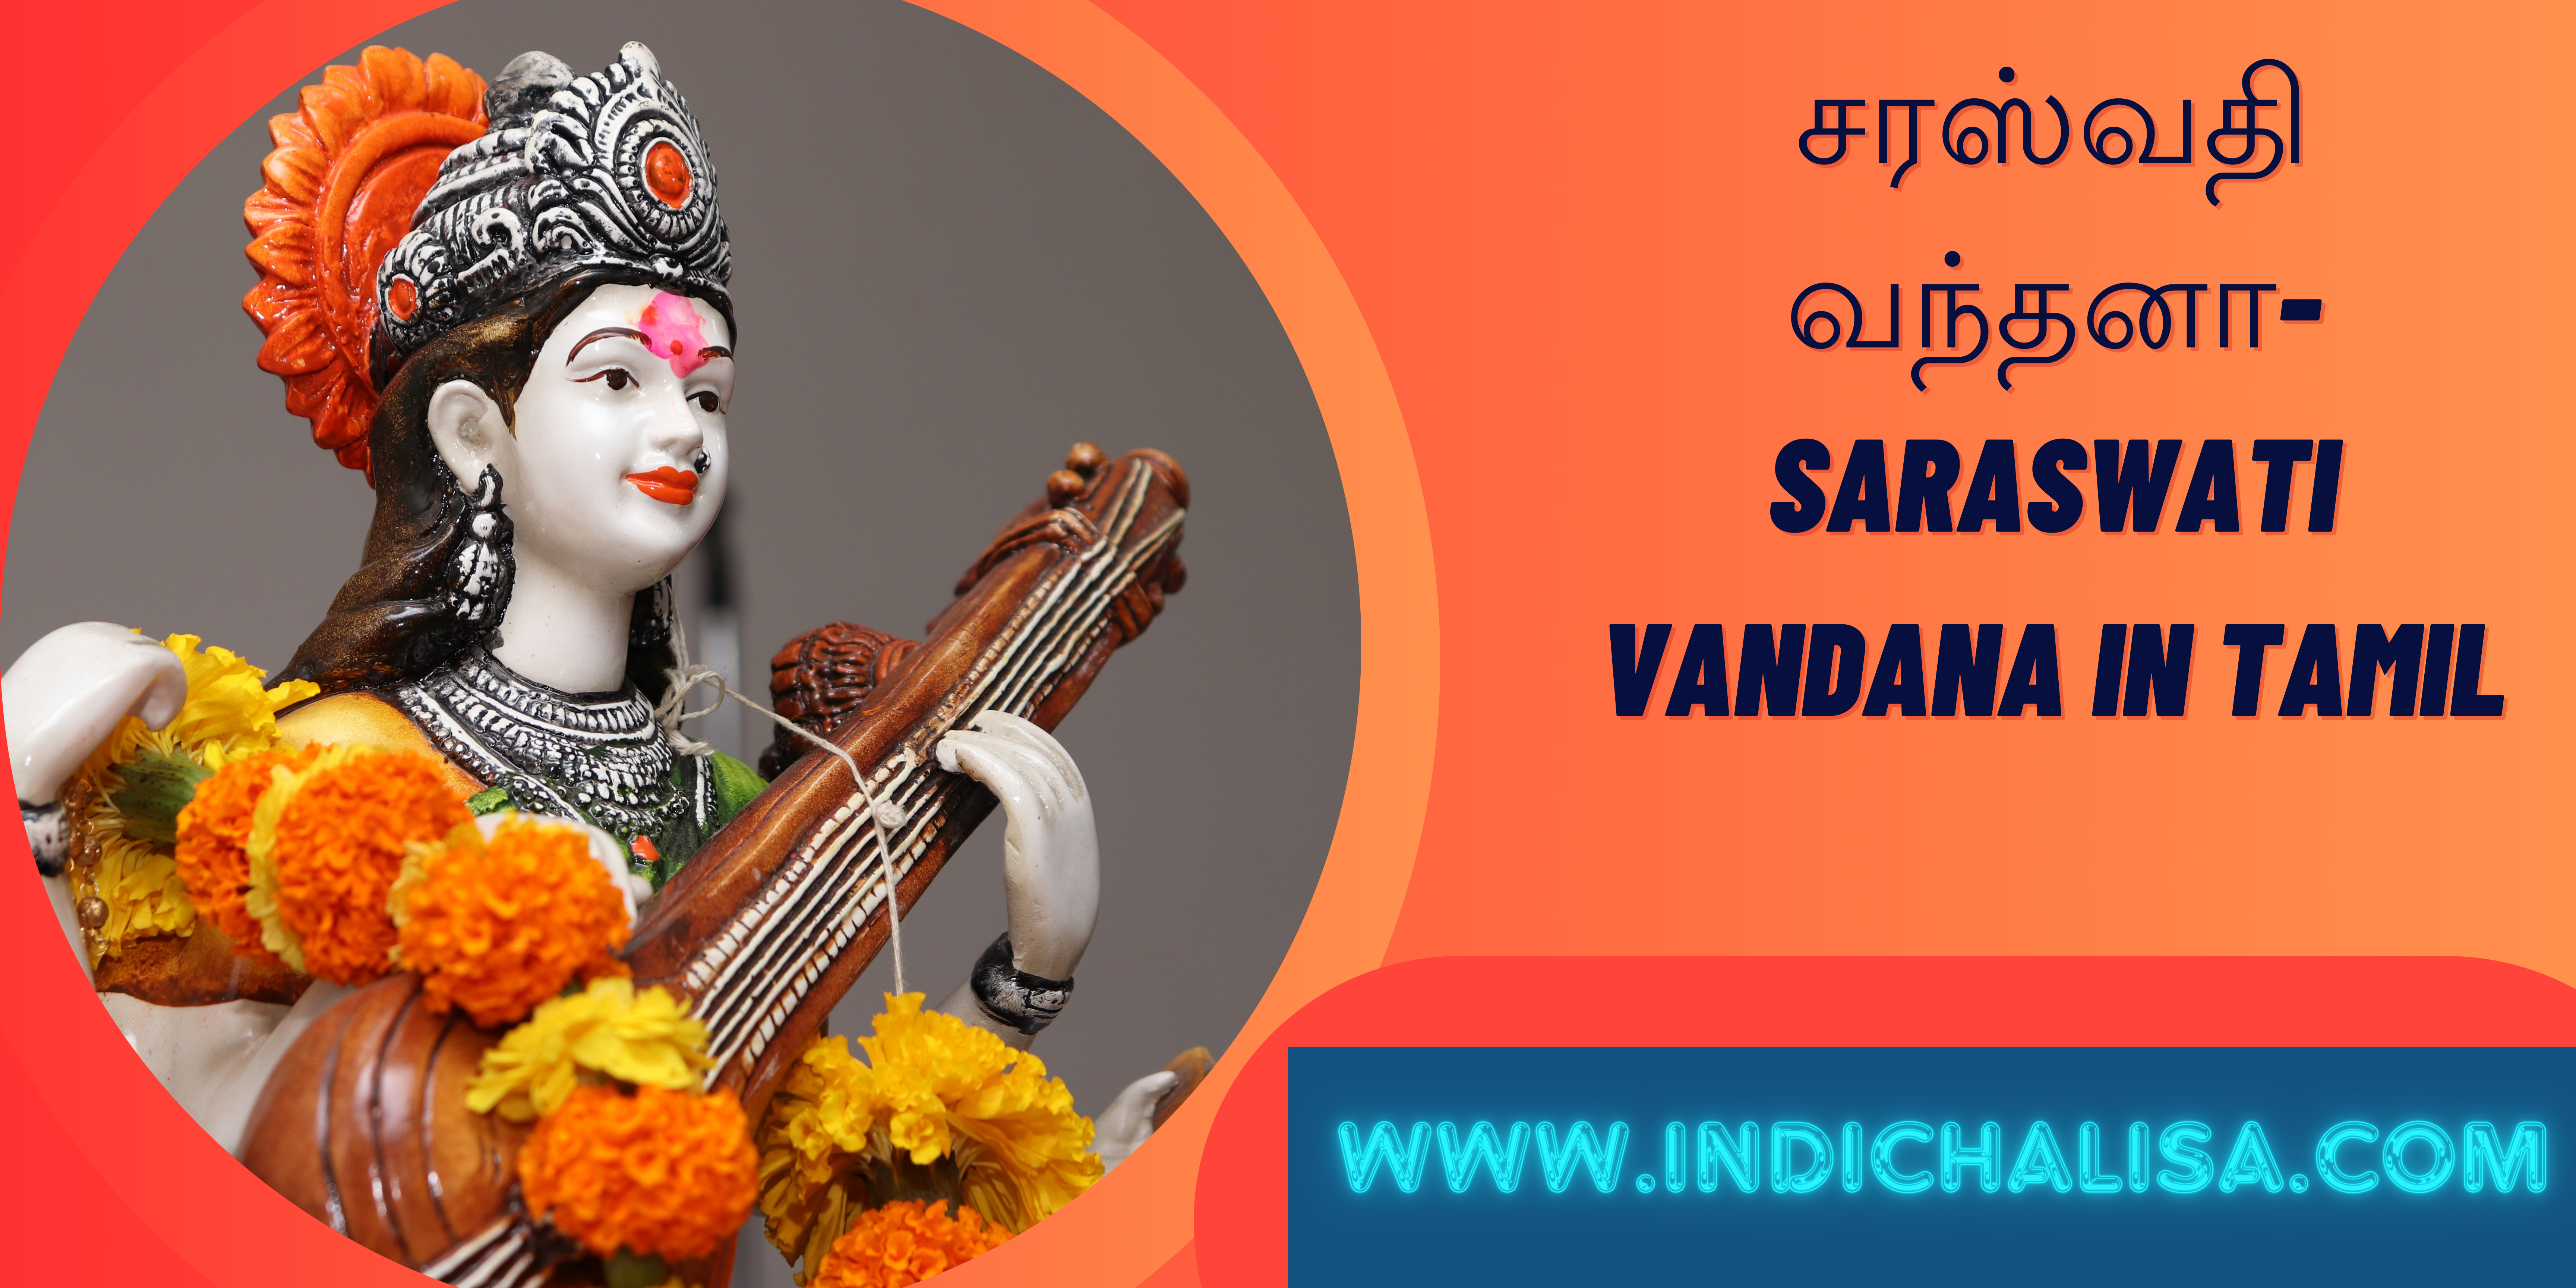 Saraswati Vandana In Tamil|Saraswati Vandana In Tamil|Indichalisa|Indichalisa